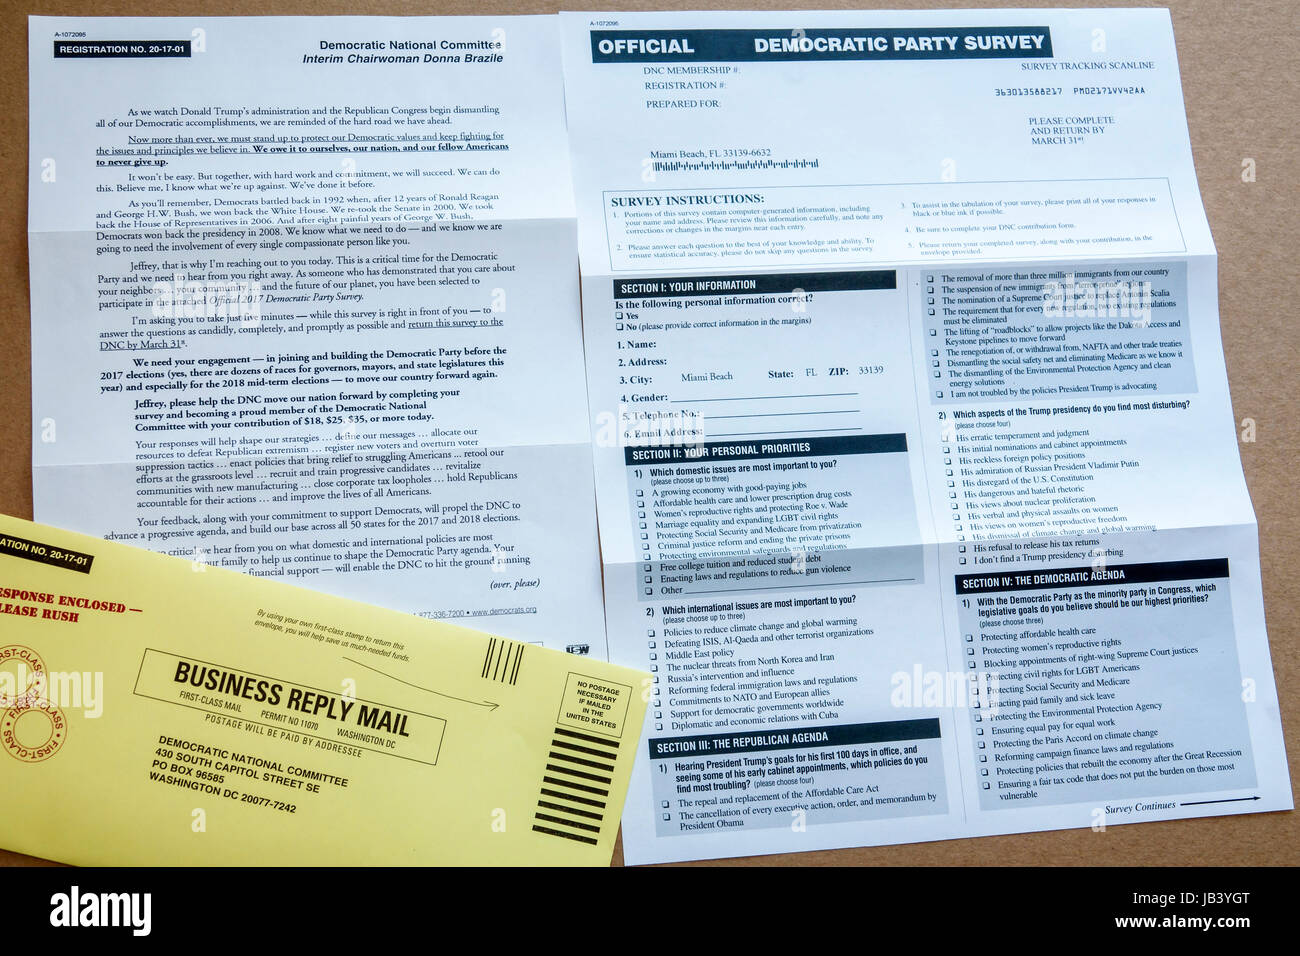 Miami Beach Florida,Democratic National Committee,DNC,political party,form,survey,prepaid envelope,FL170401054 Stock Photo